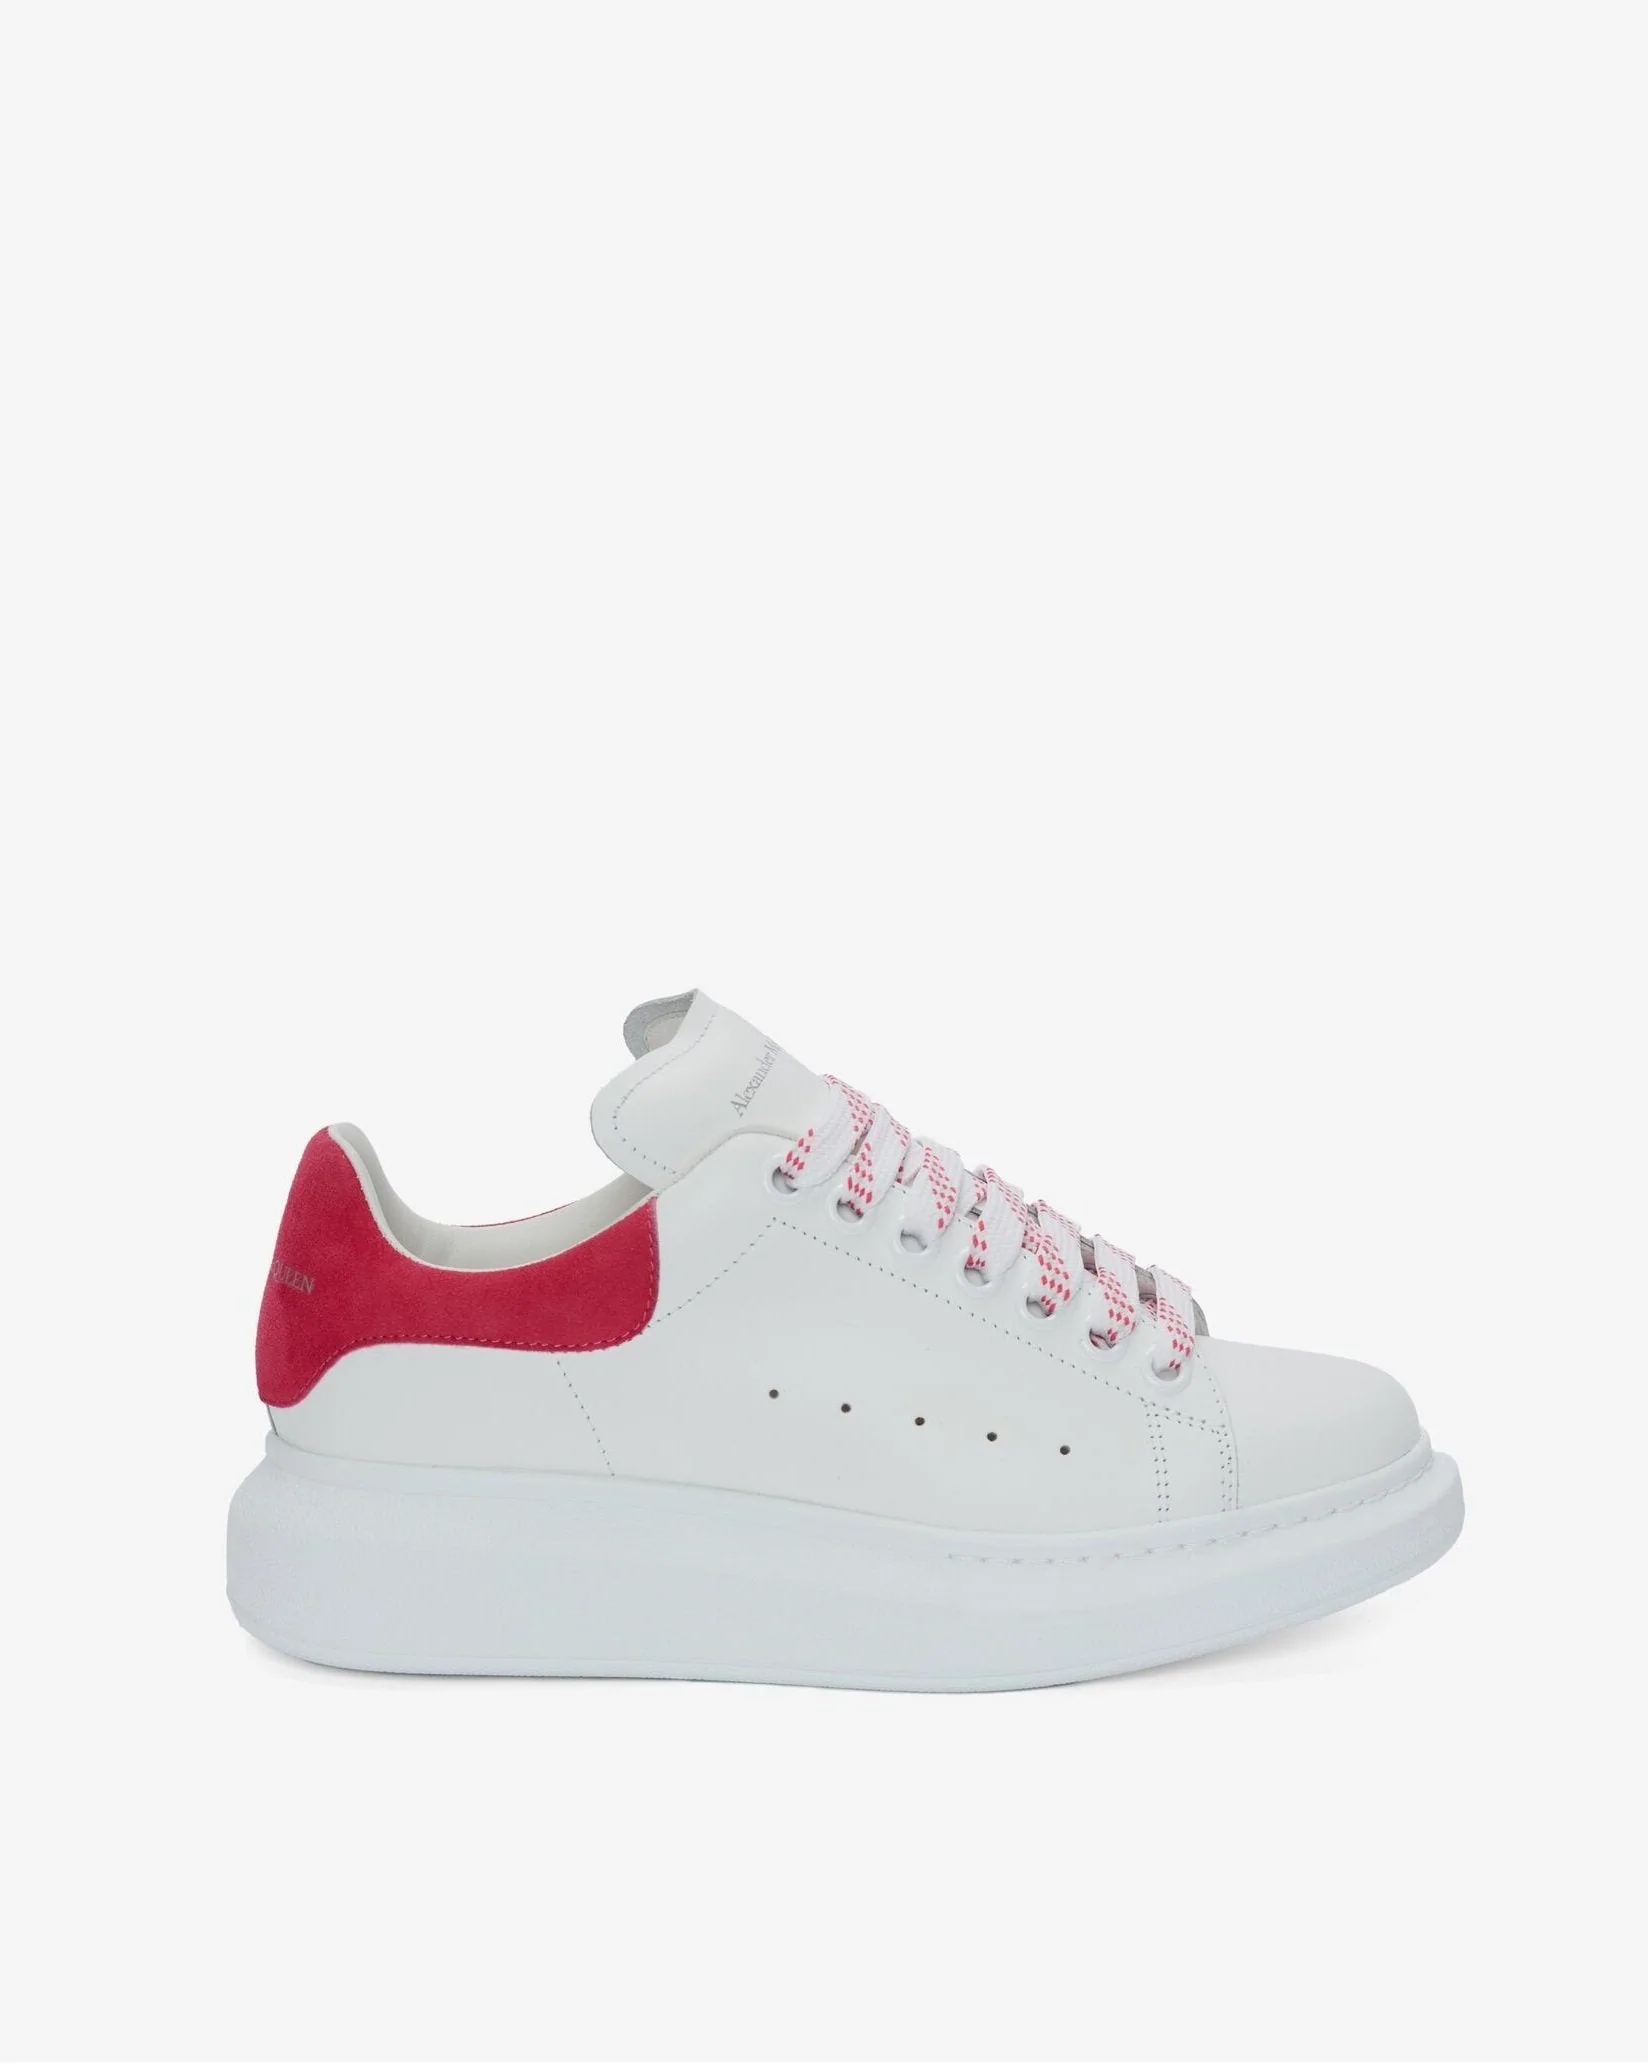 Alexander McQueen Women's Platform Sneaker, Red White